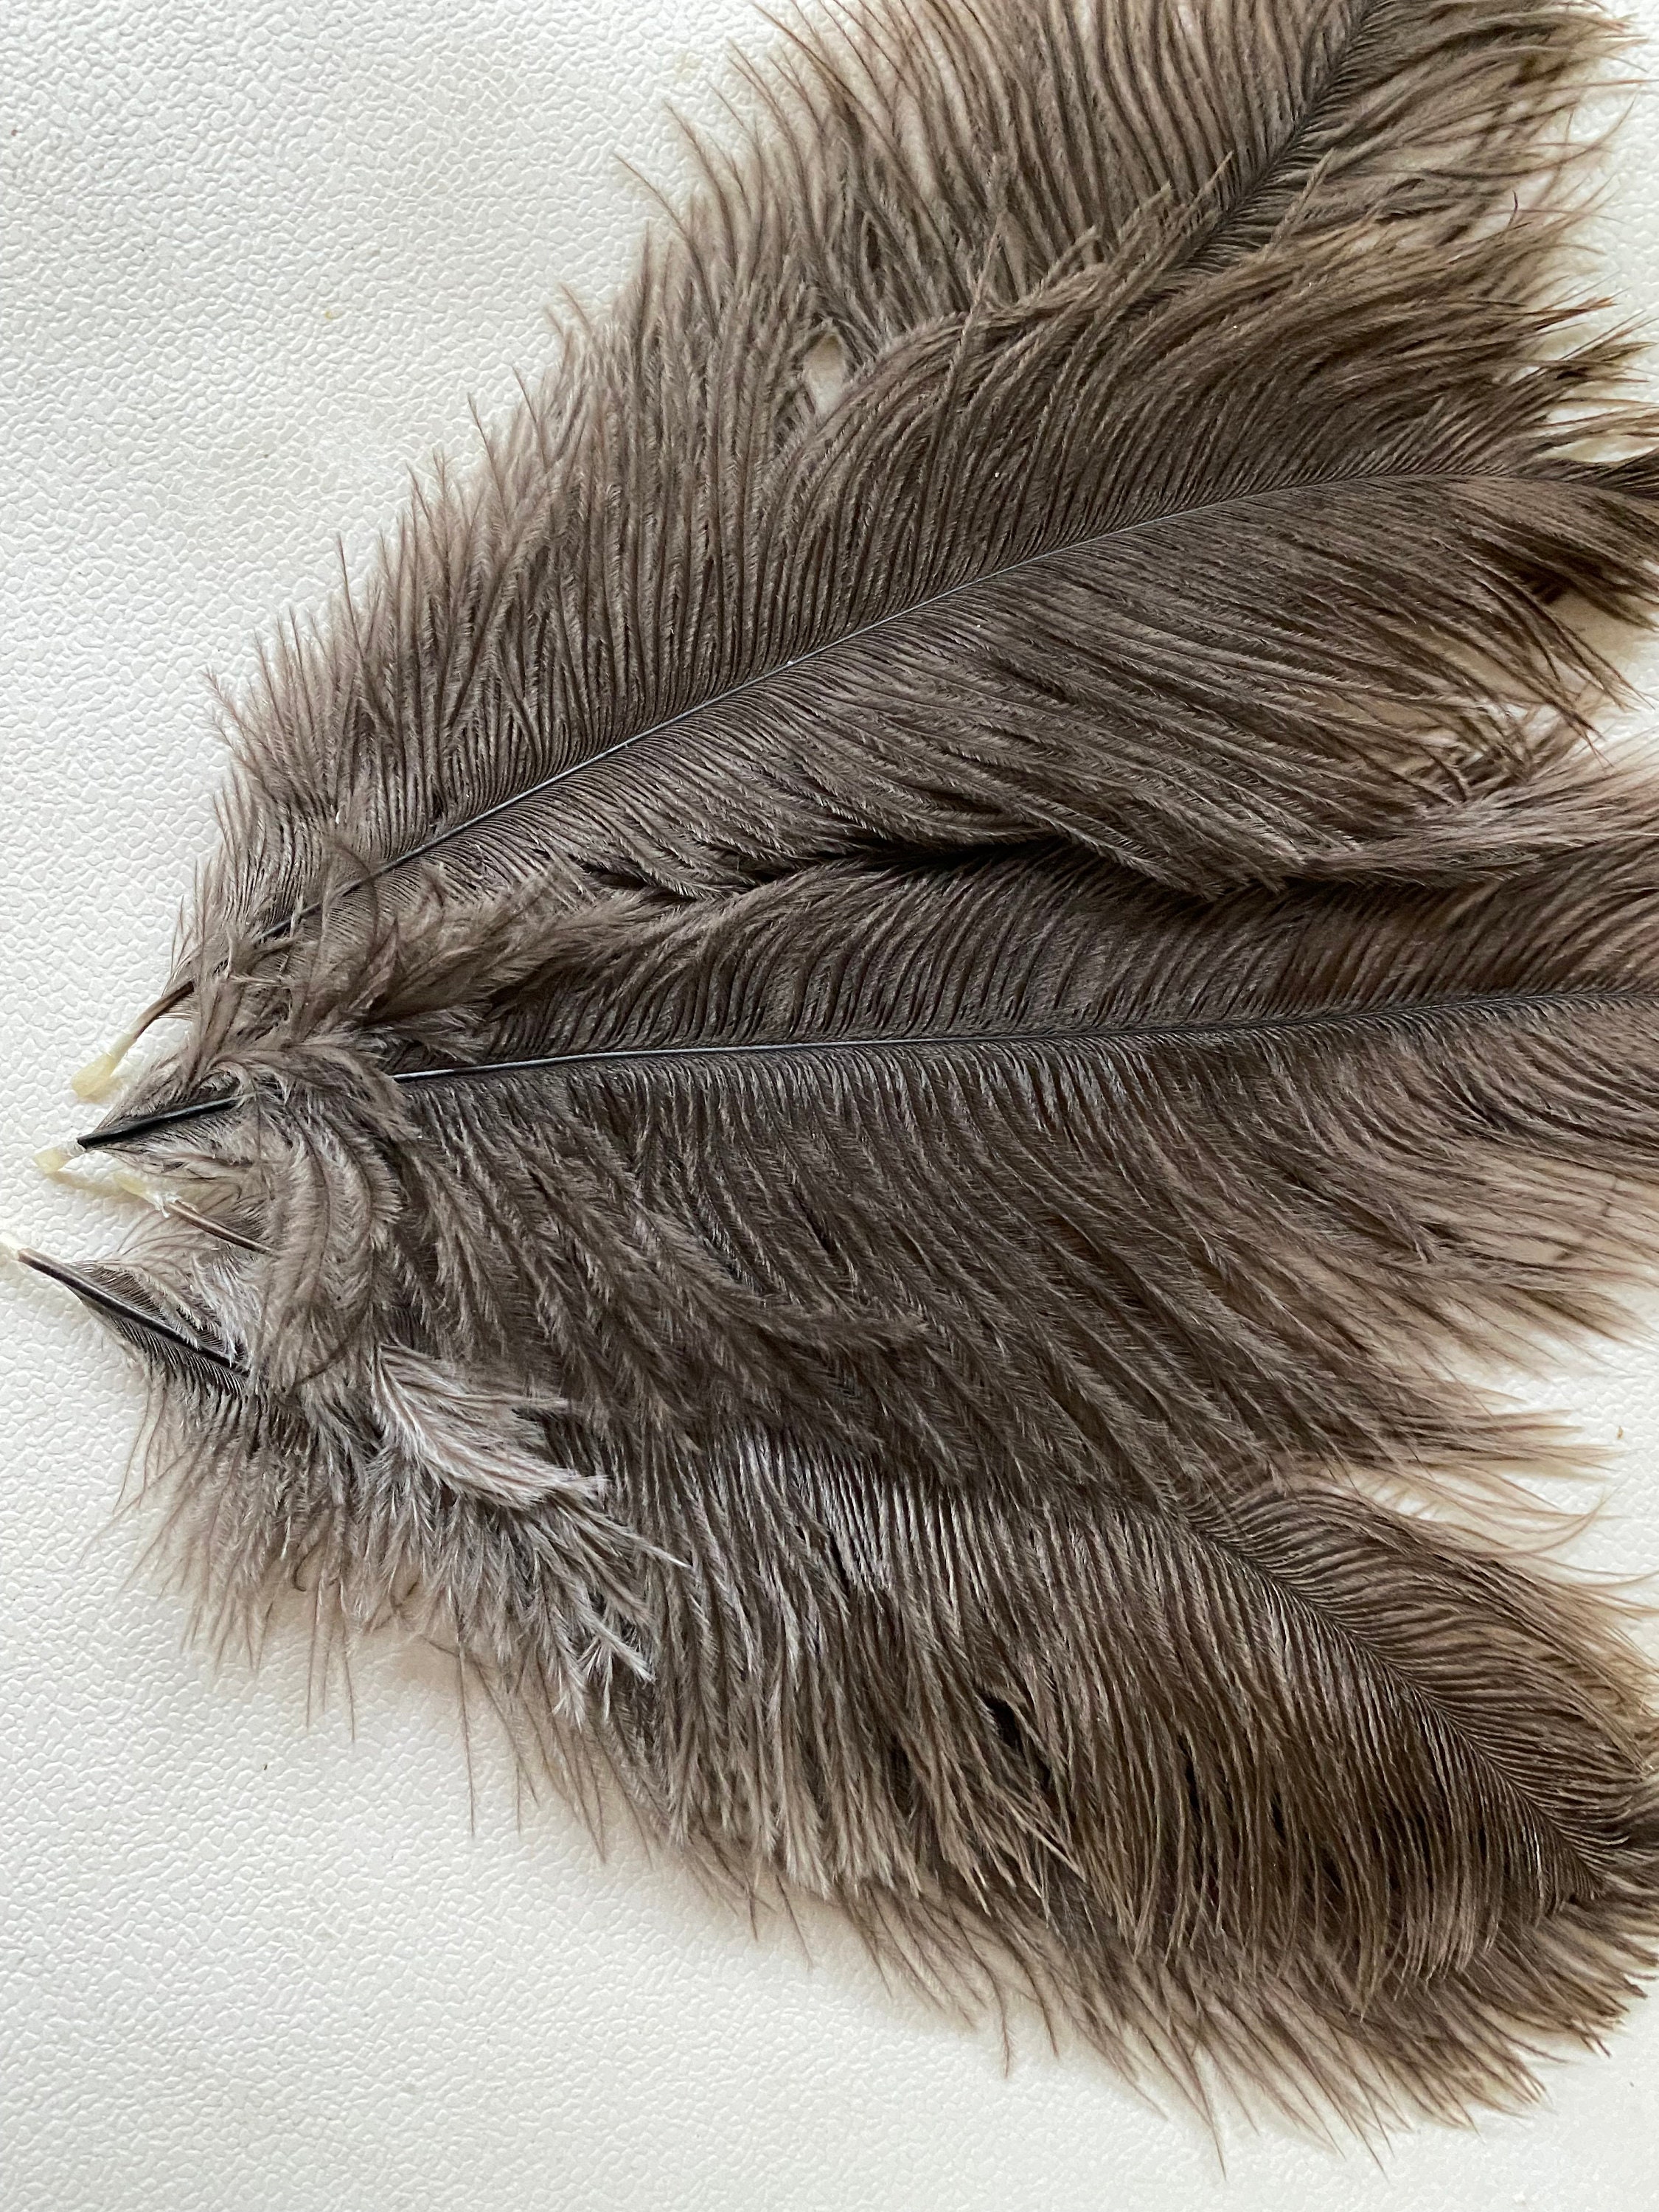 Orange Ostrich Feather 16-20 inch Long per Each